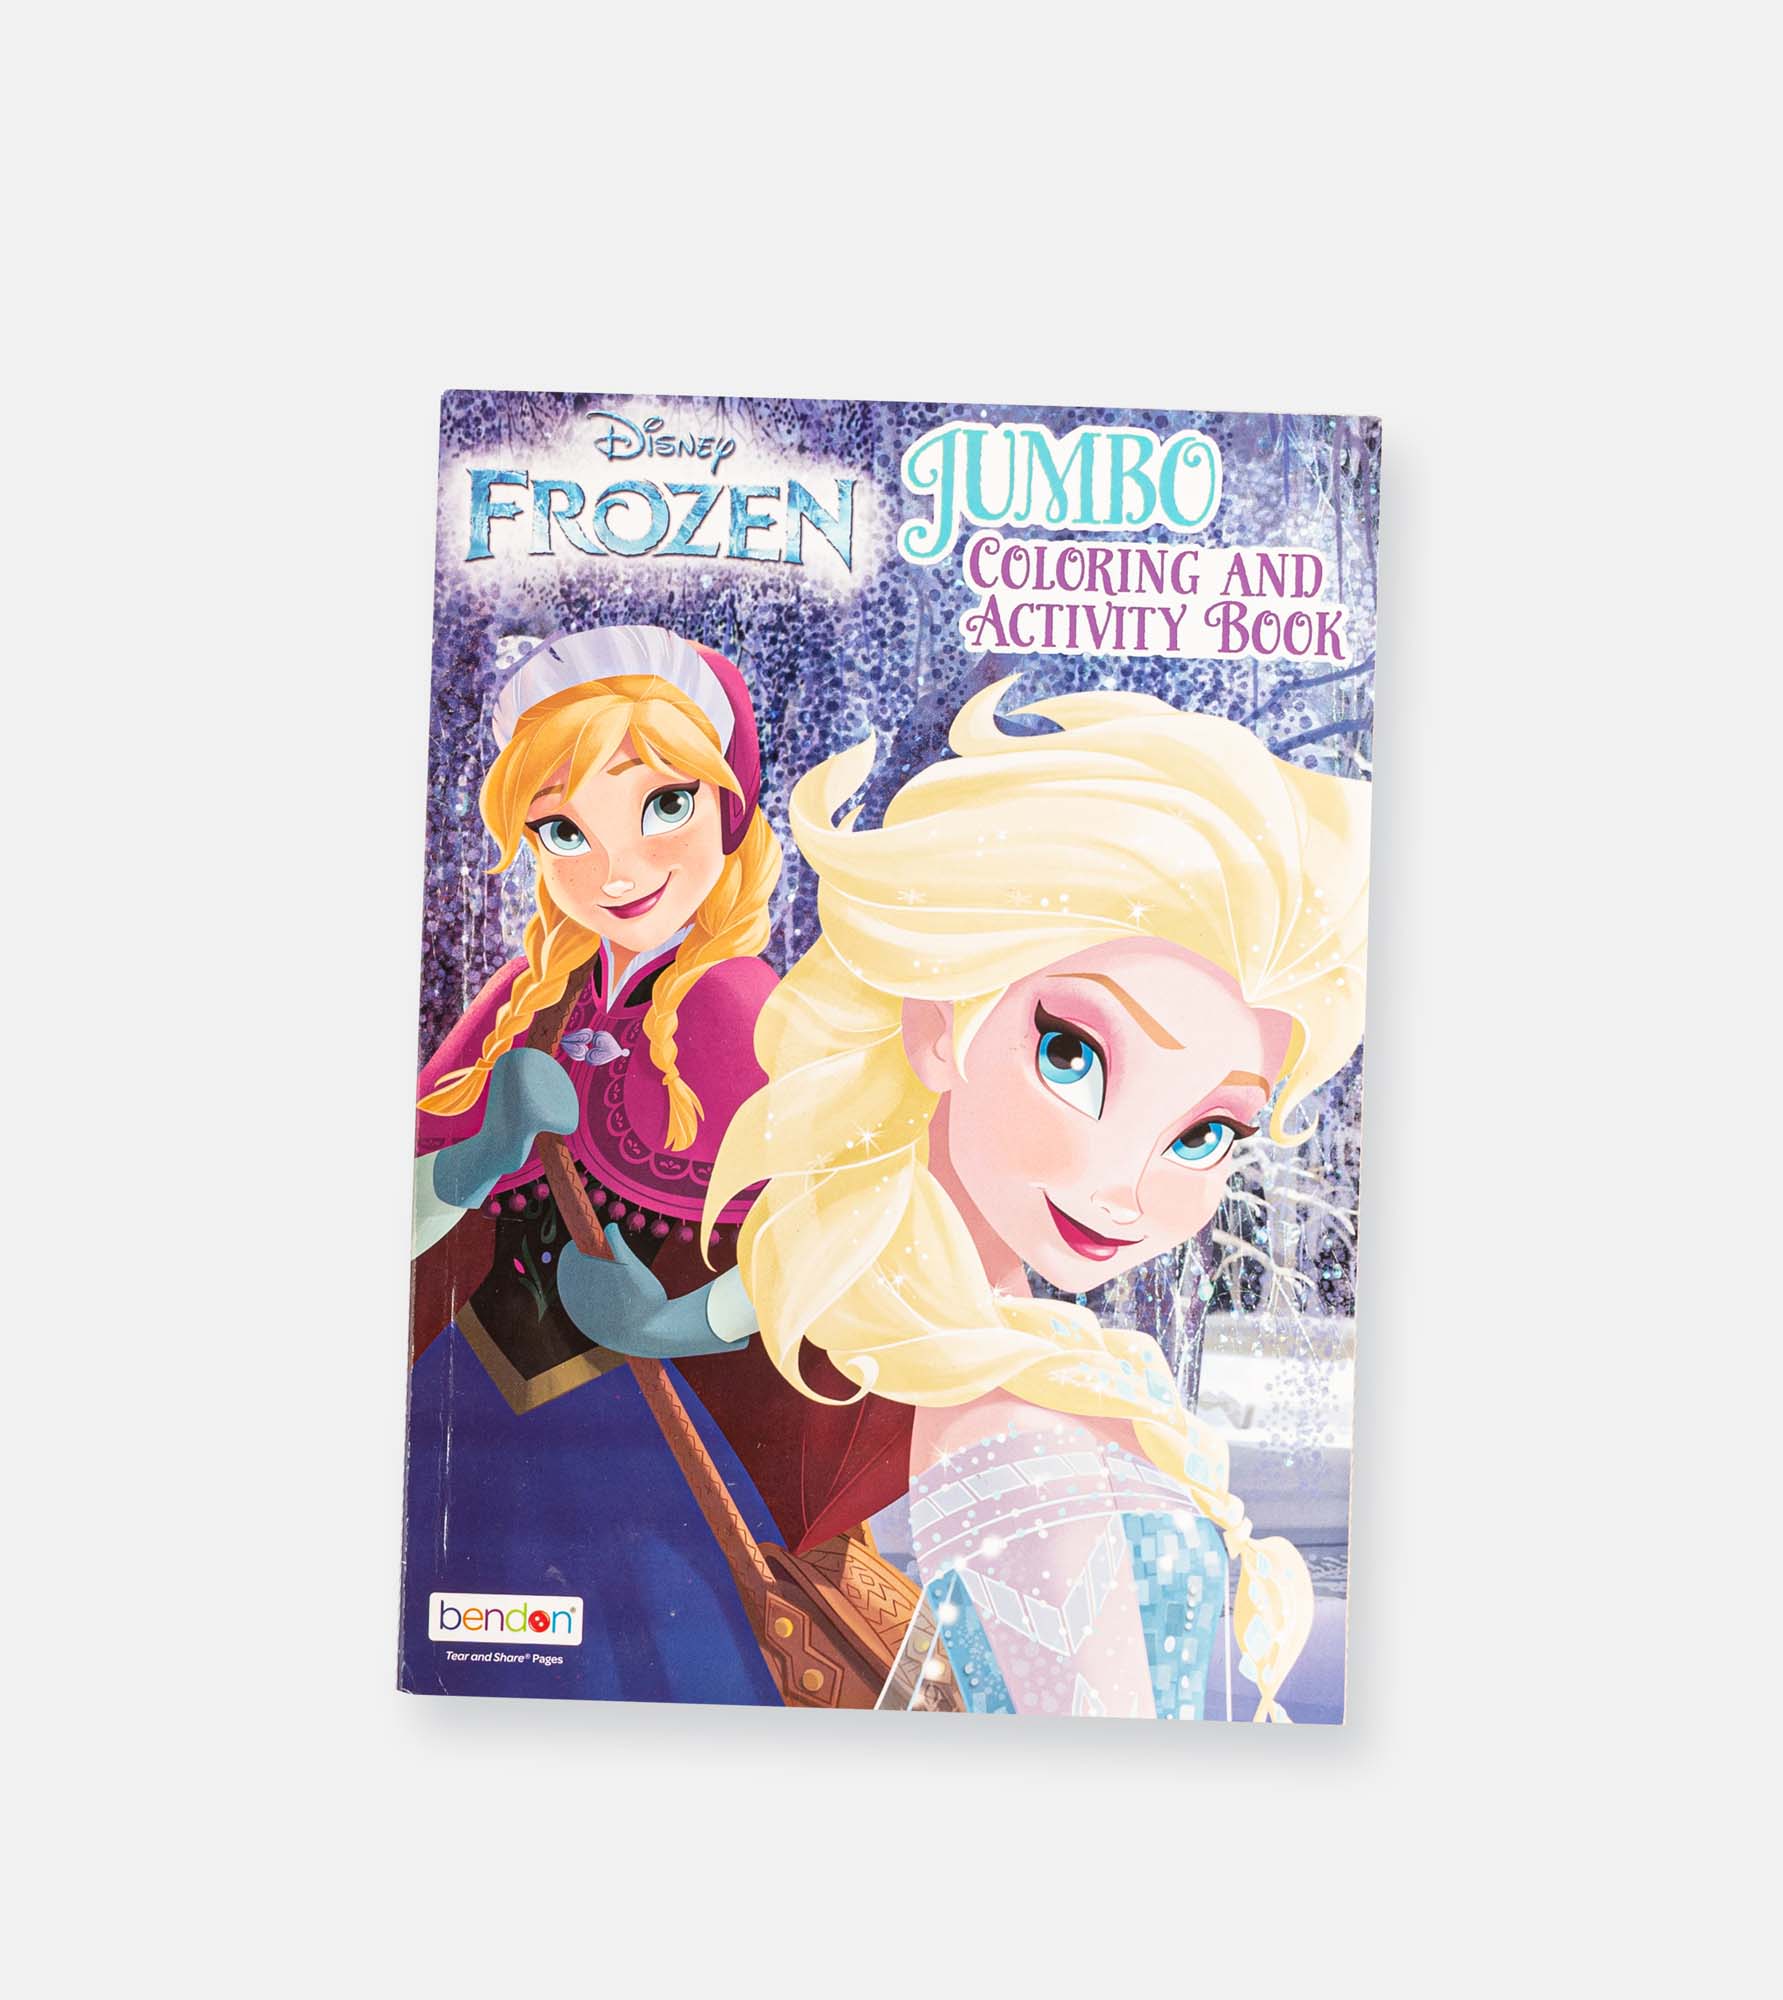 Disney Frozen jumbo coloring and activity book